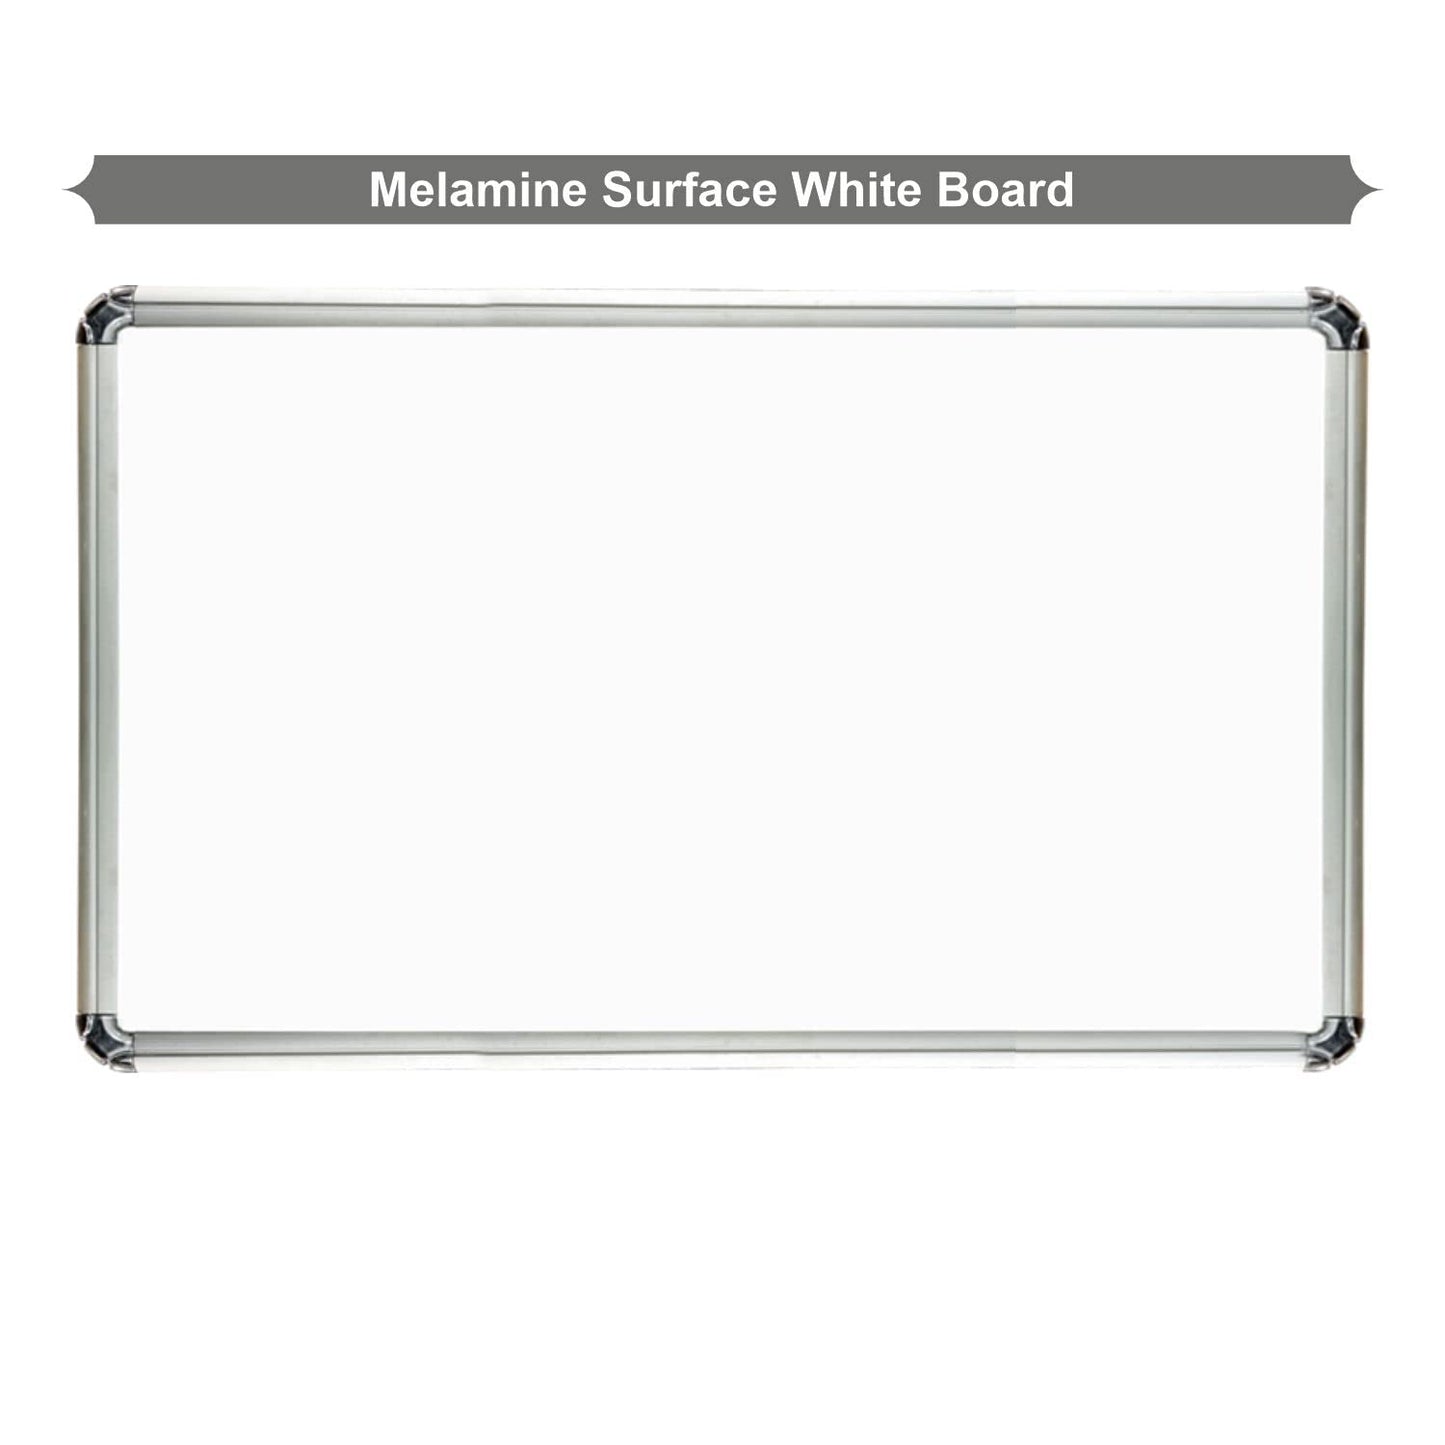 Digismart Board Whiteboard Nova Channel for Office, Home & School Aluminum Frame (Pack of 1) (Non Magnetic)